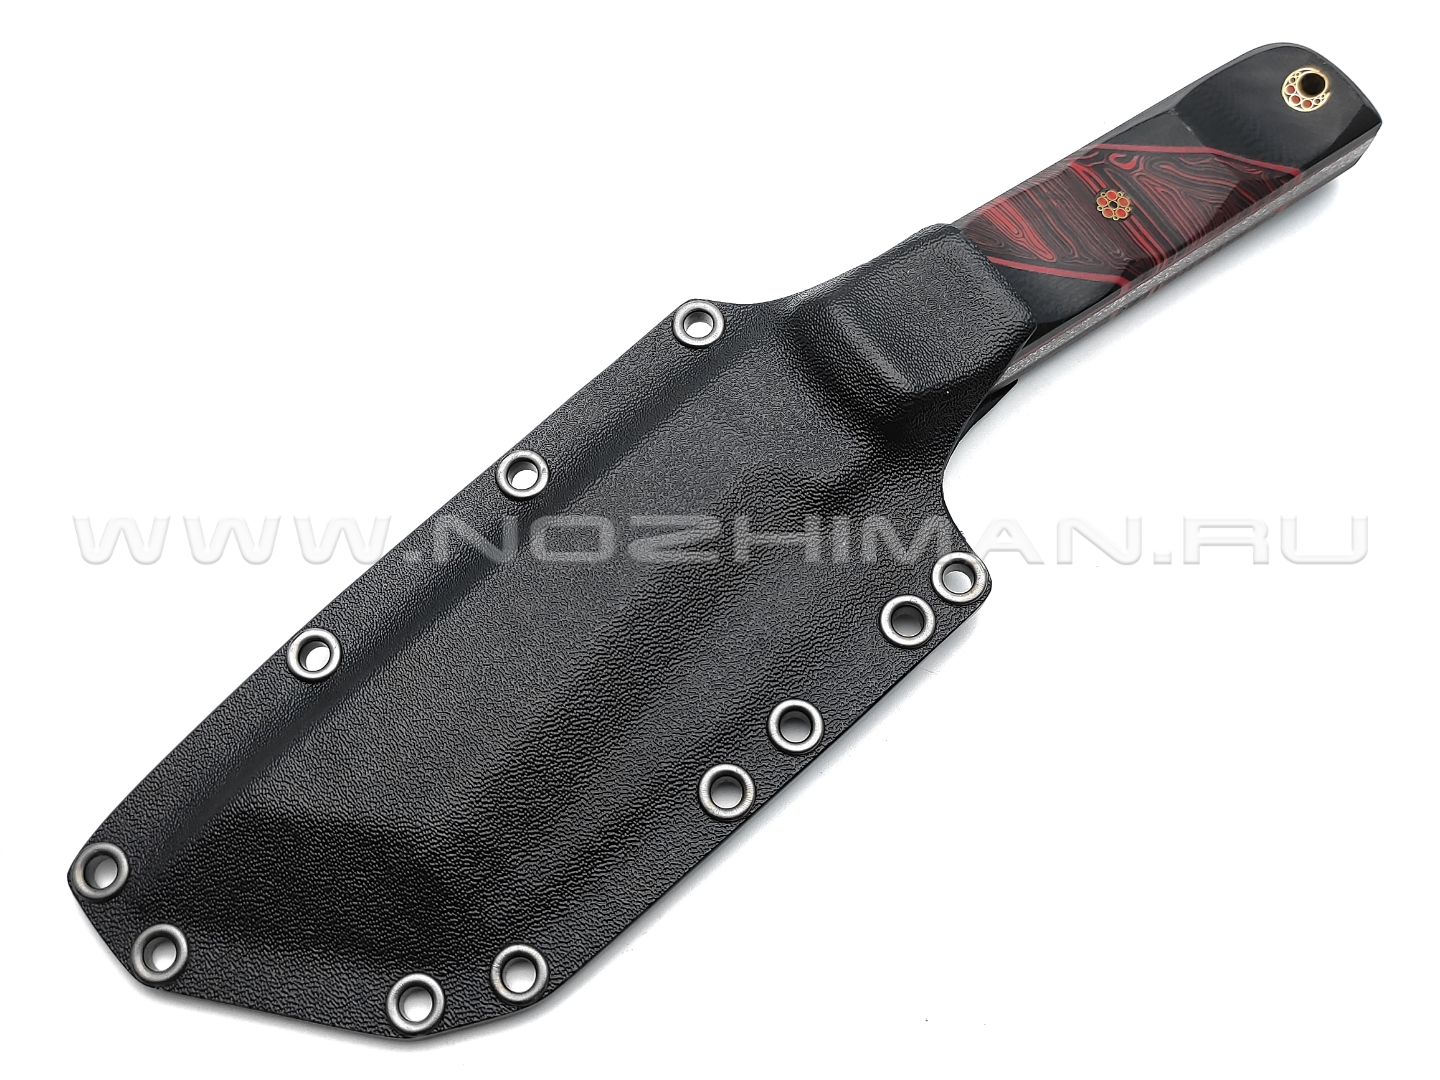 Волчий Век нож НДК 17 сталь PGK WA, рукоять G10 black & chaotic red